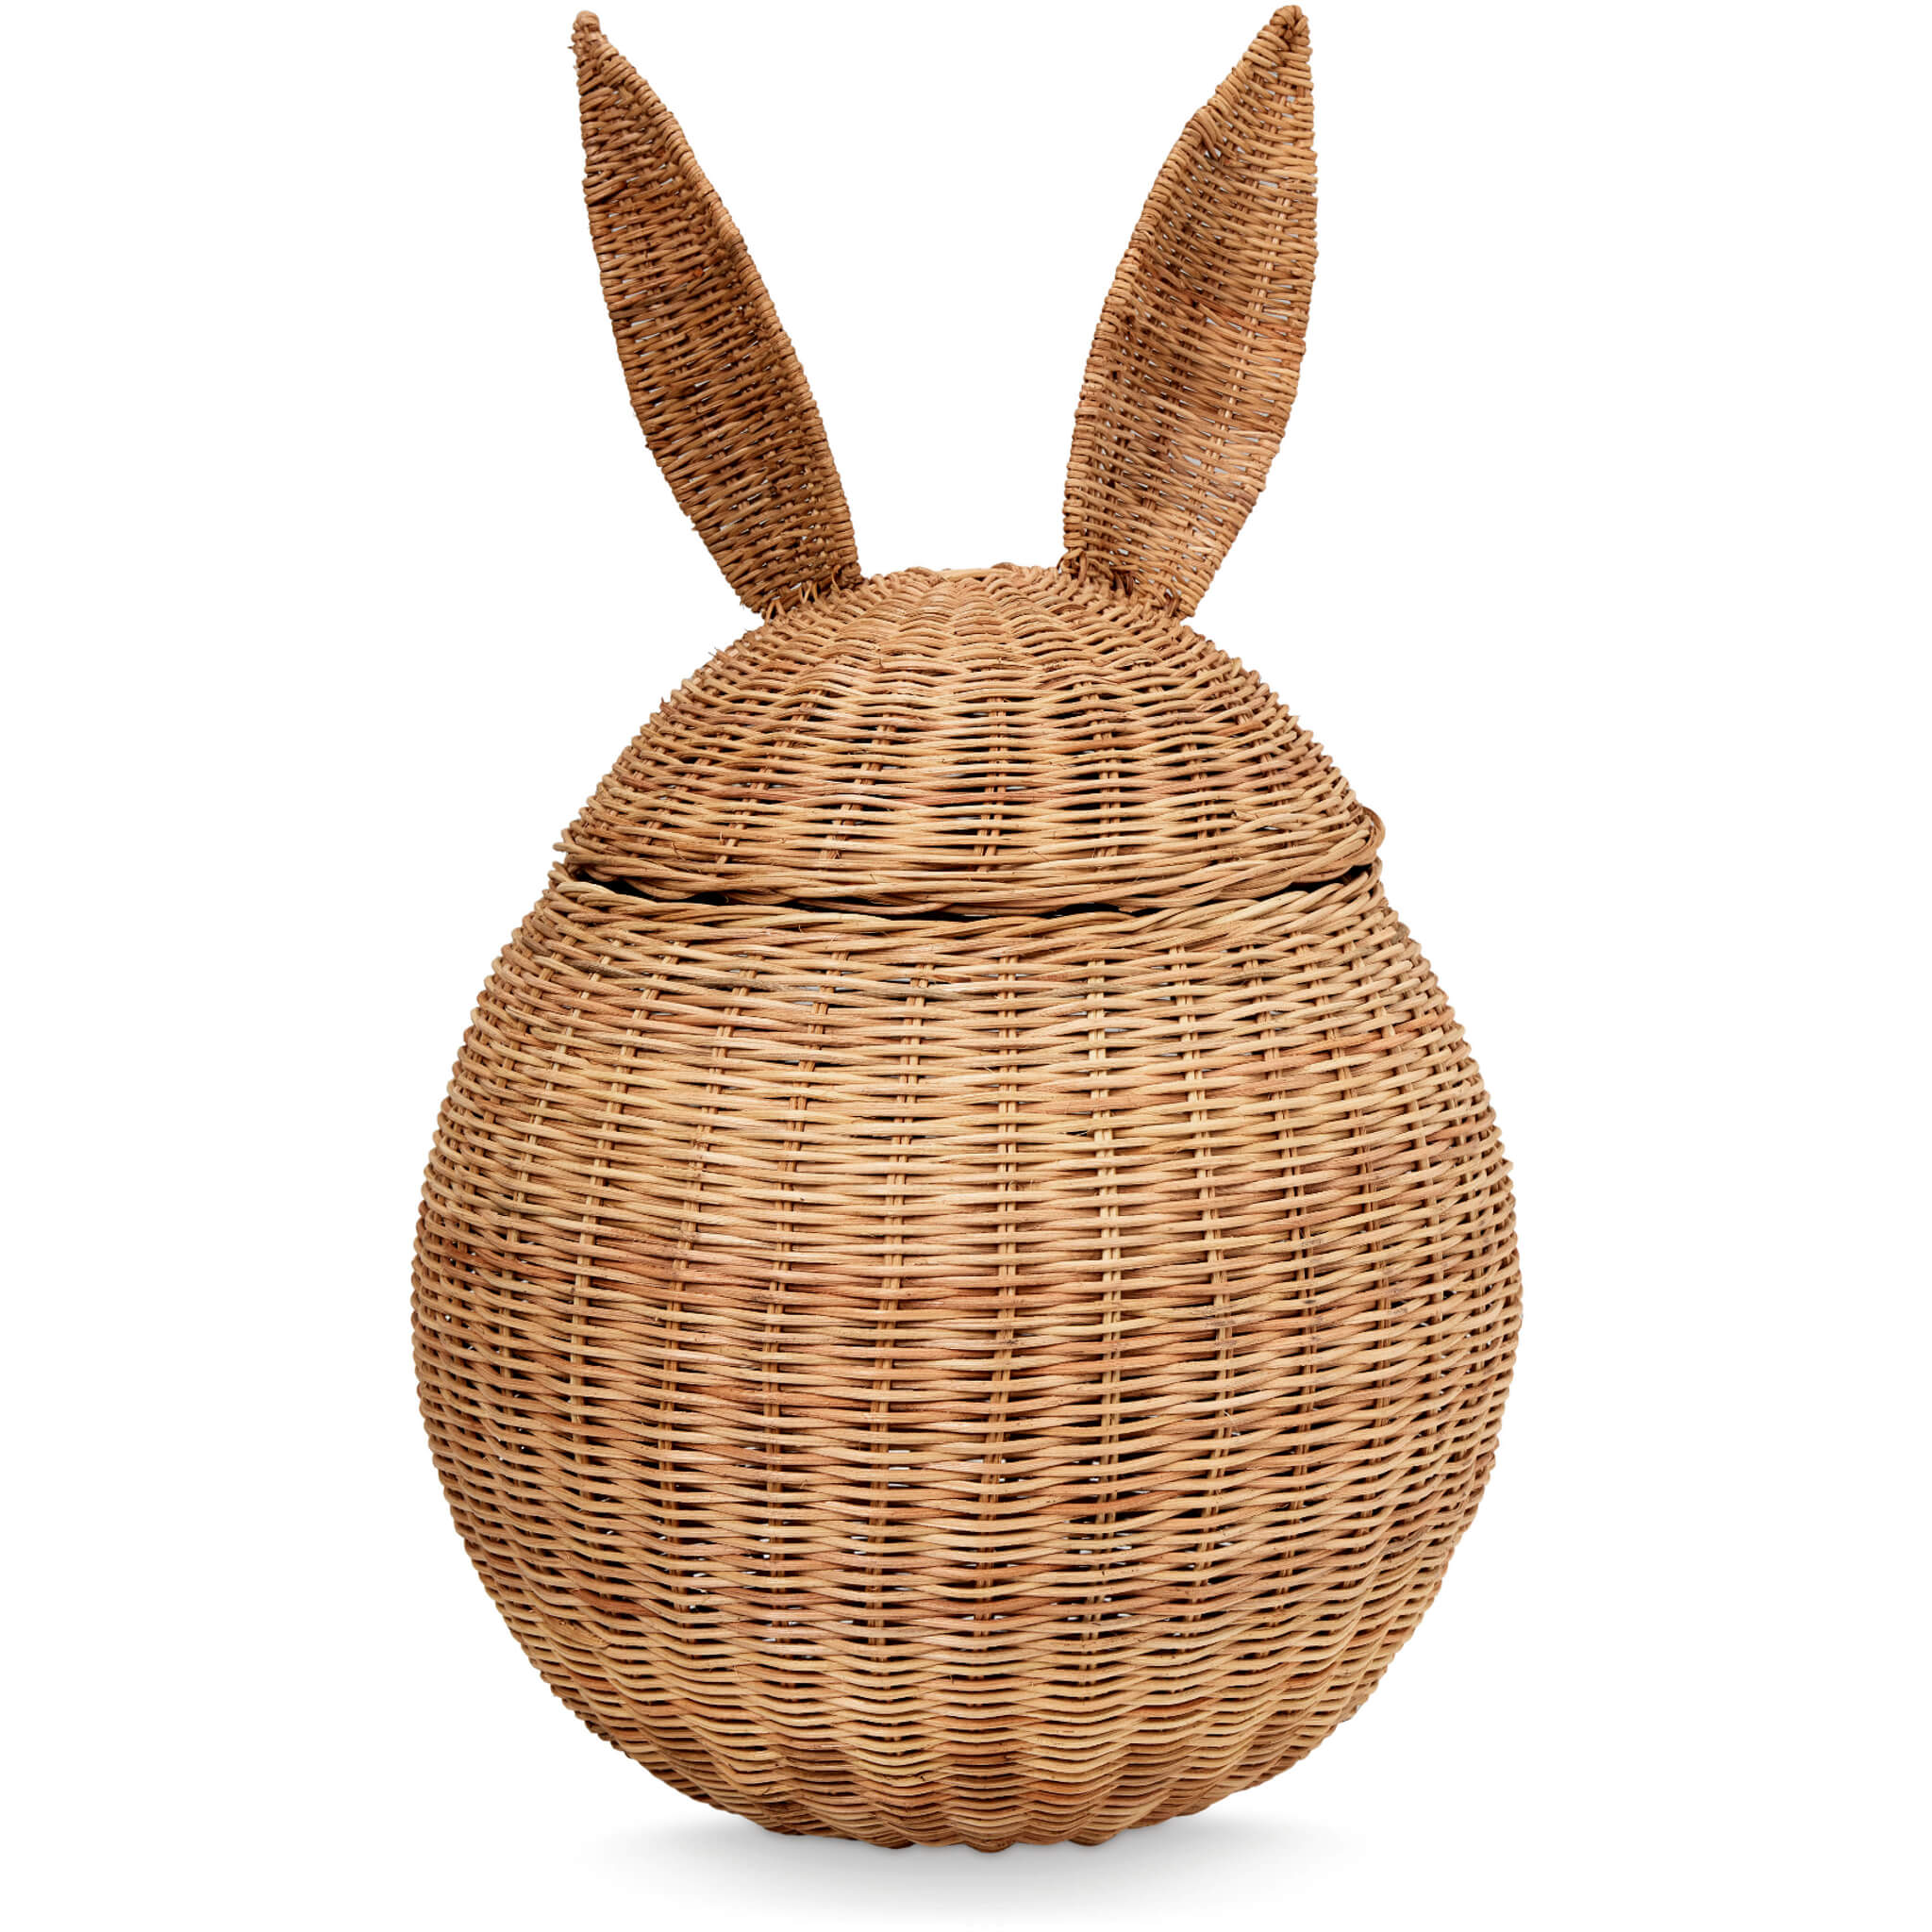 Rattan Rabbit Basket